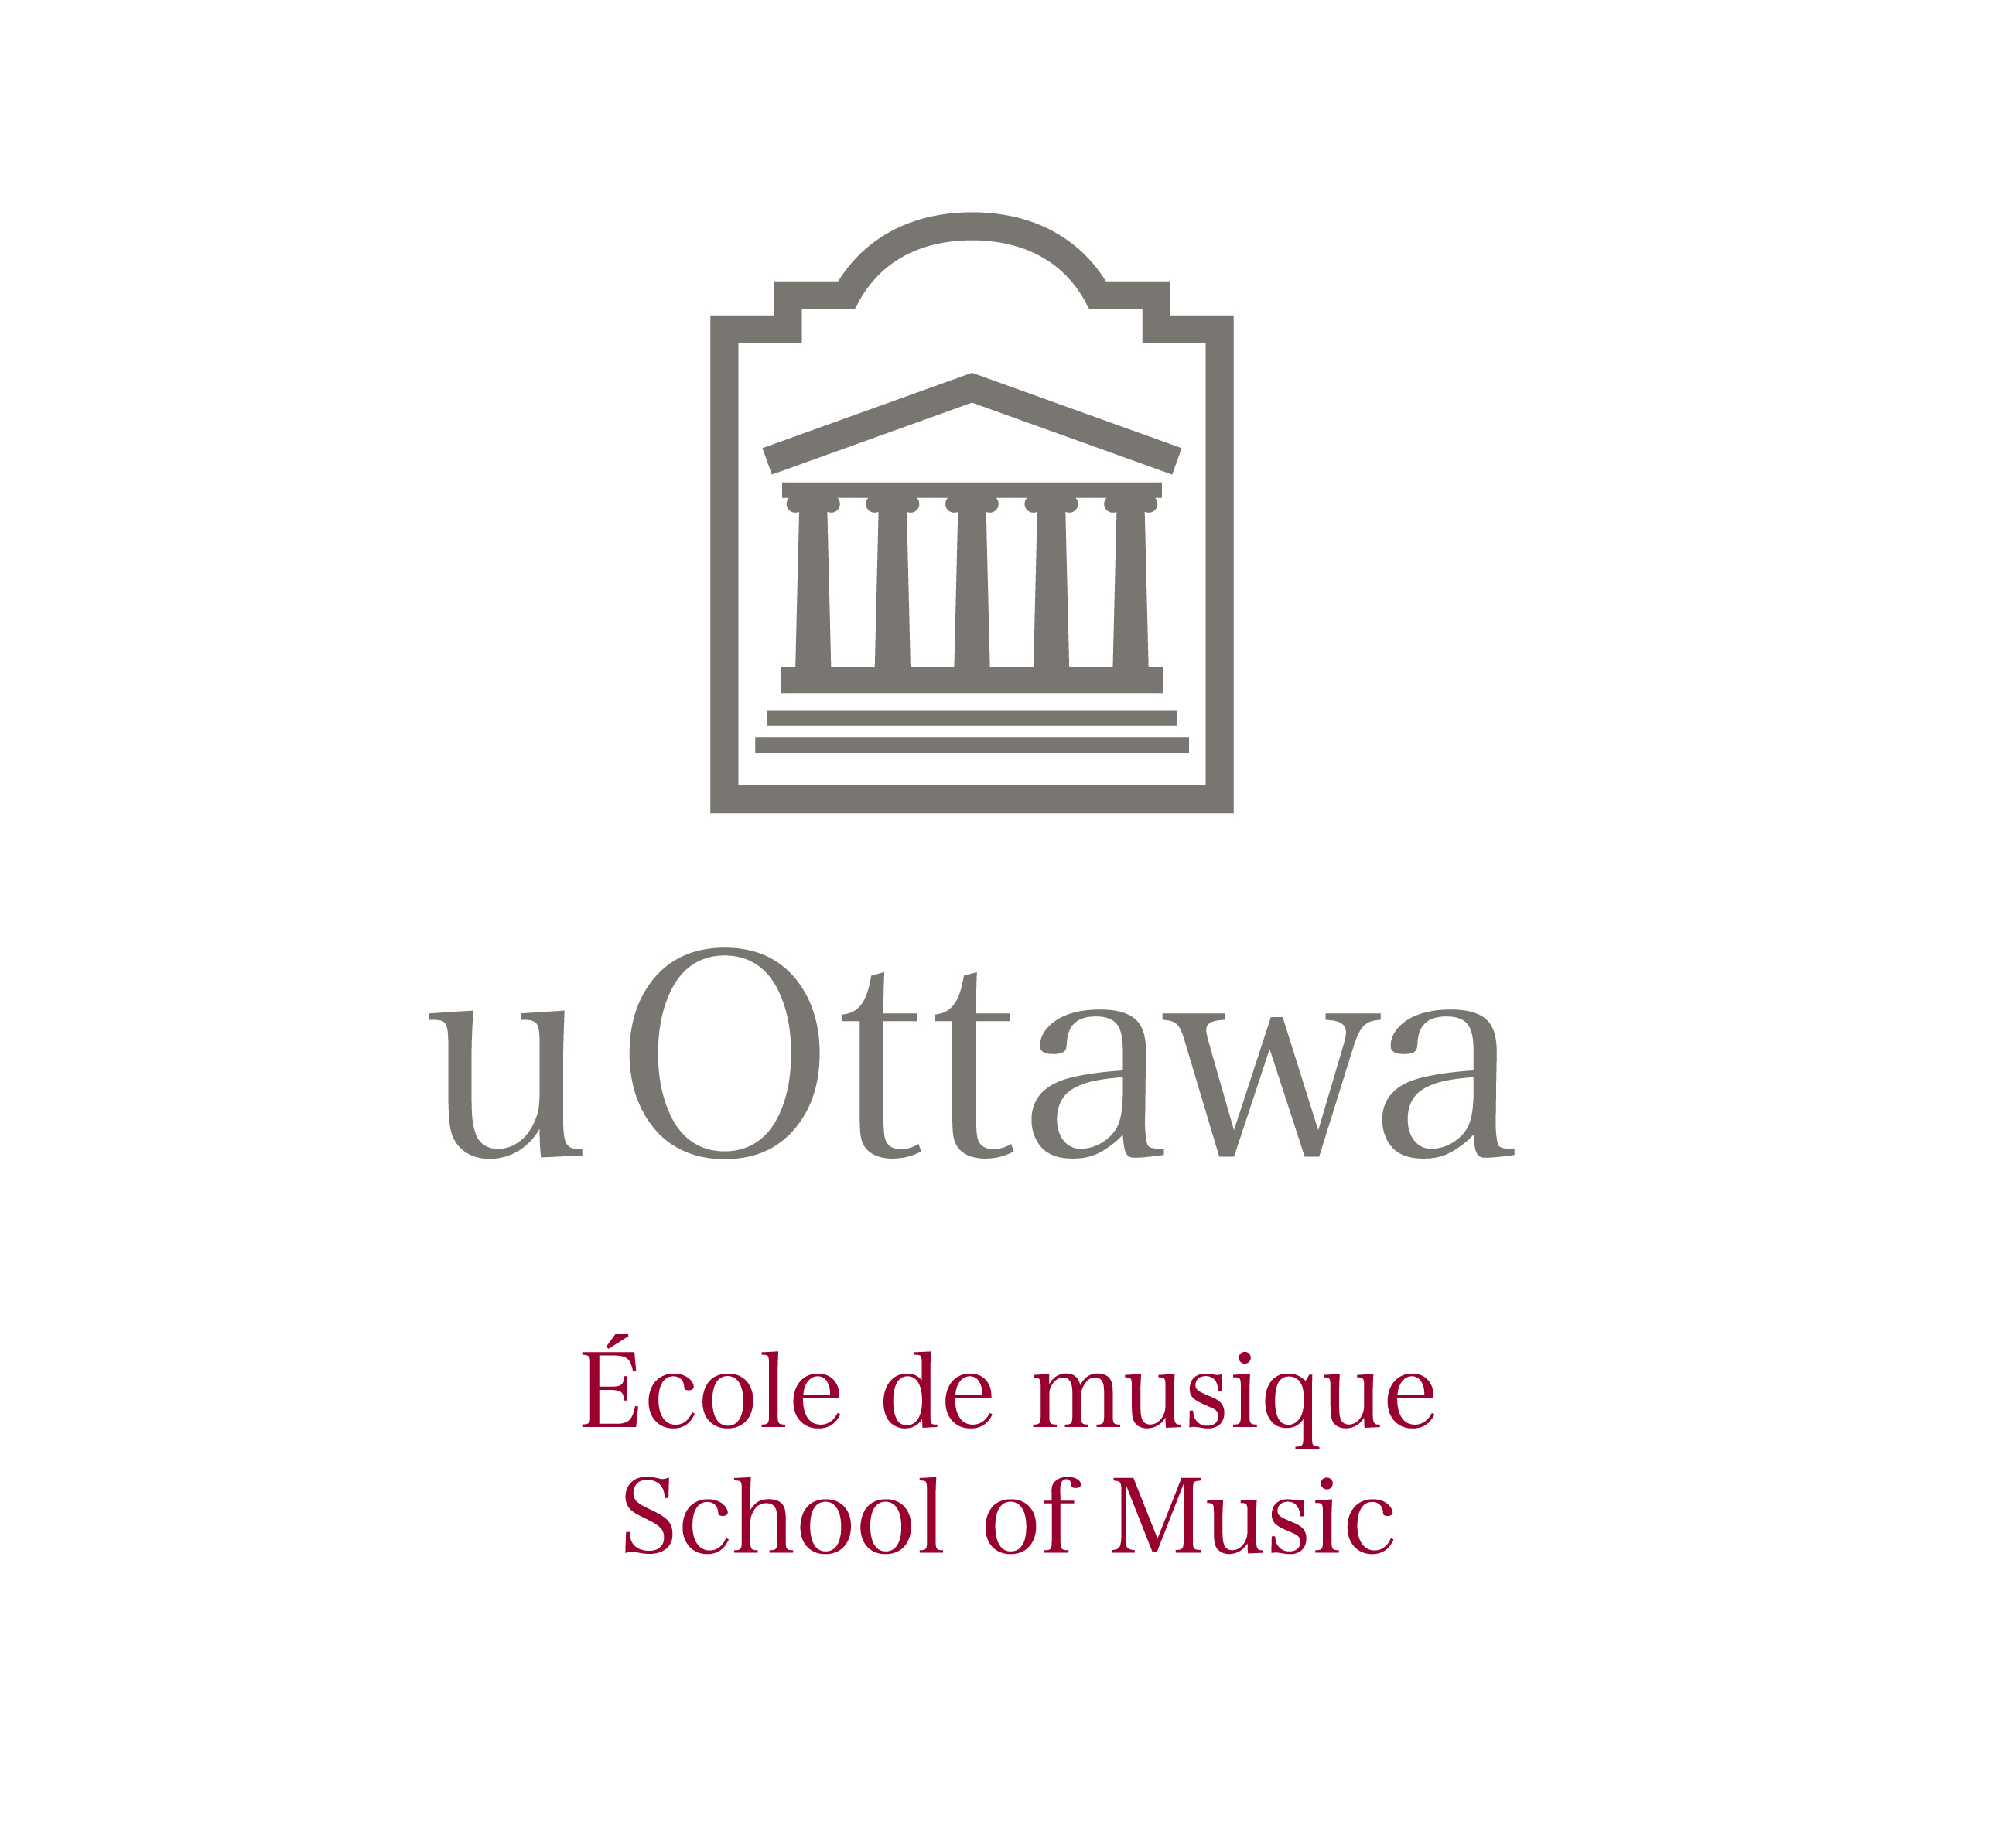 University of Ottawa School of Music